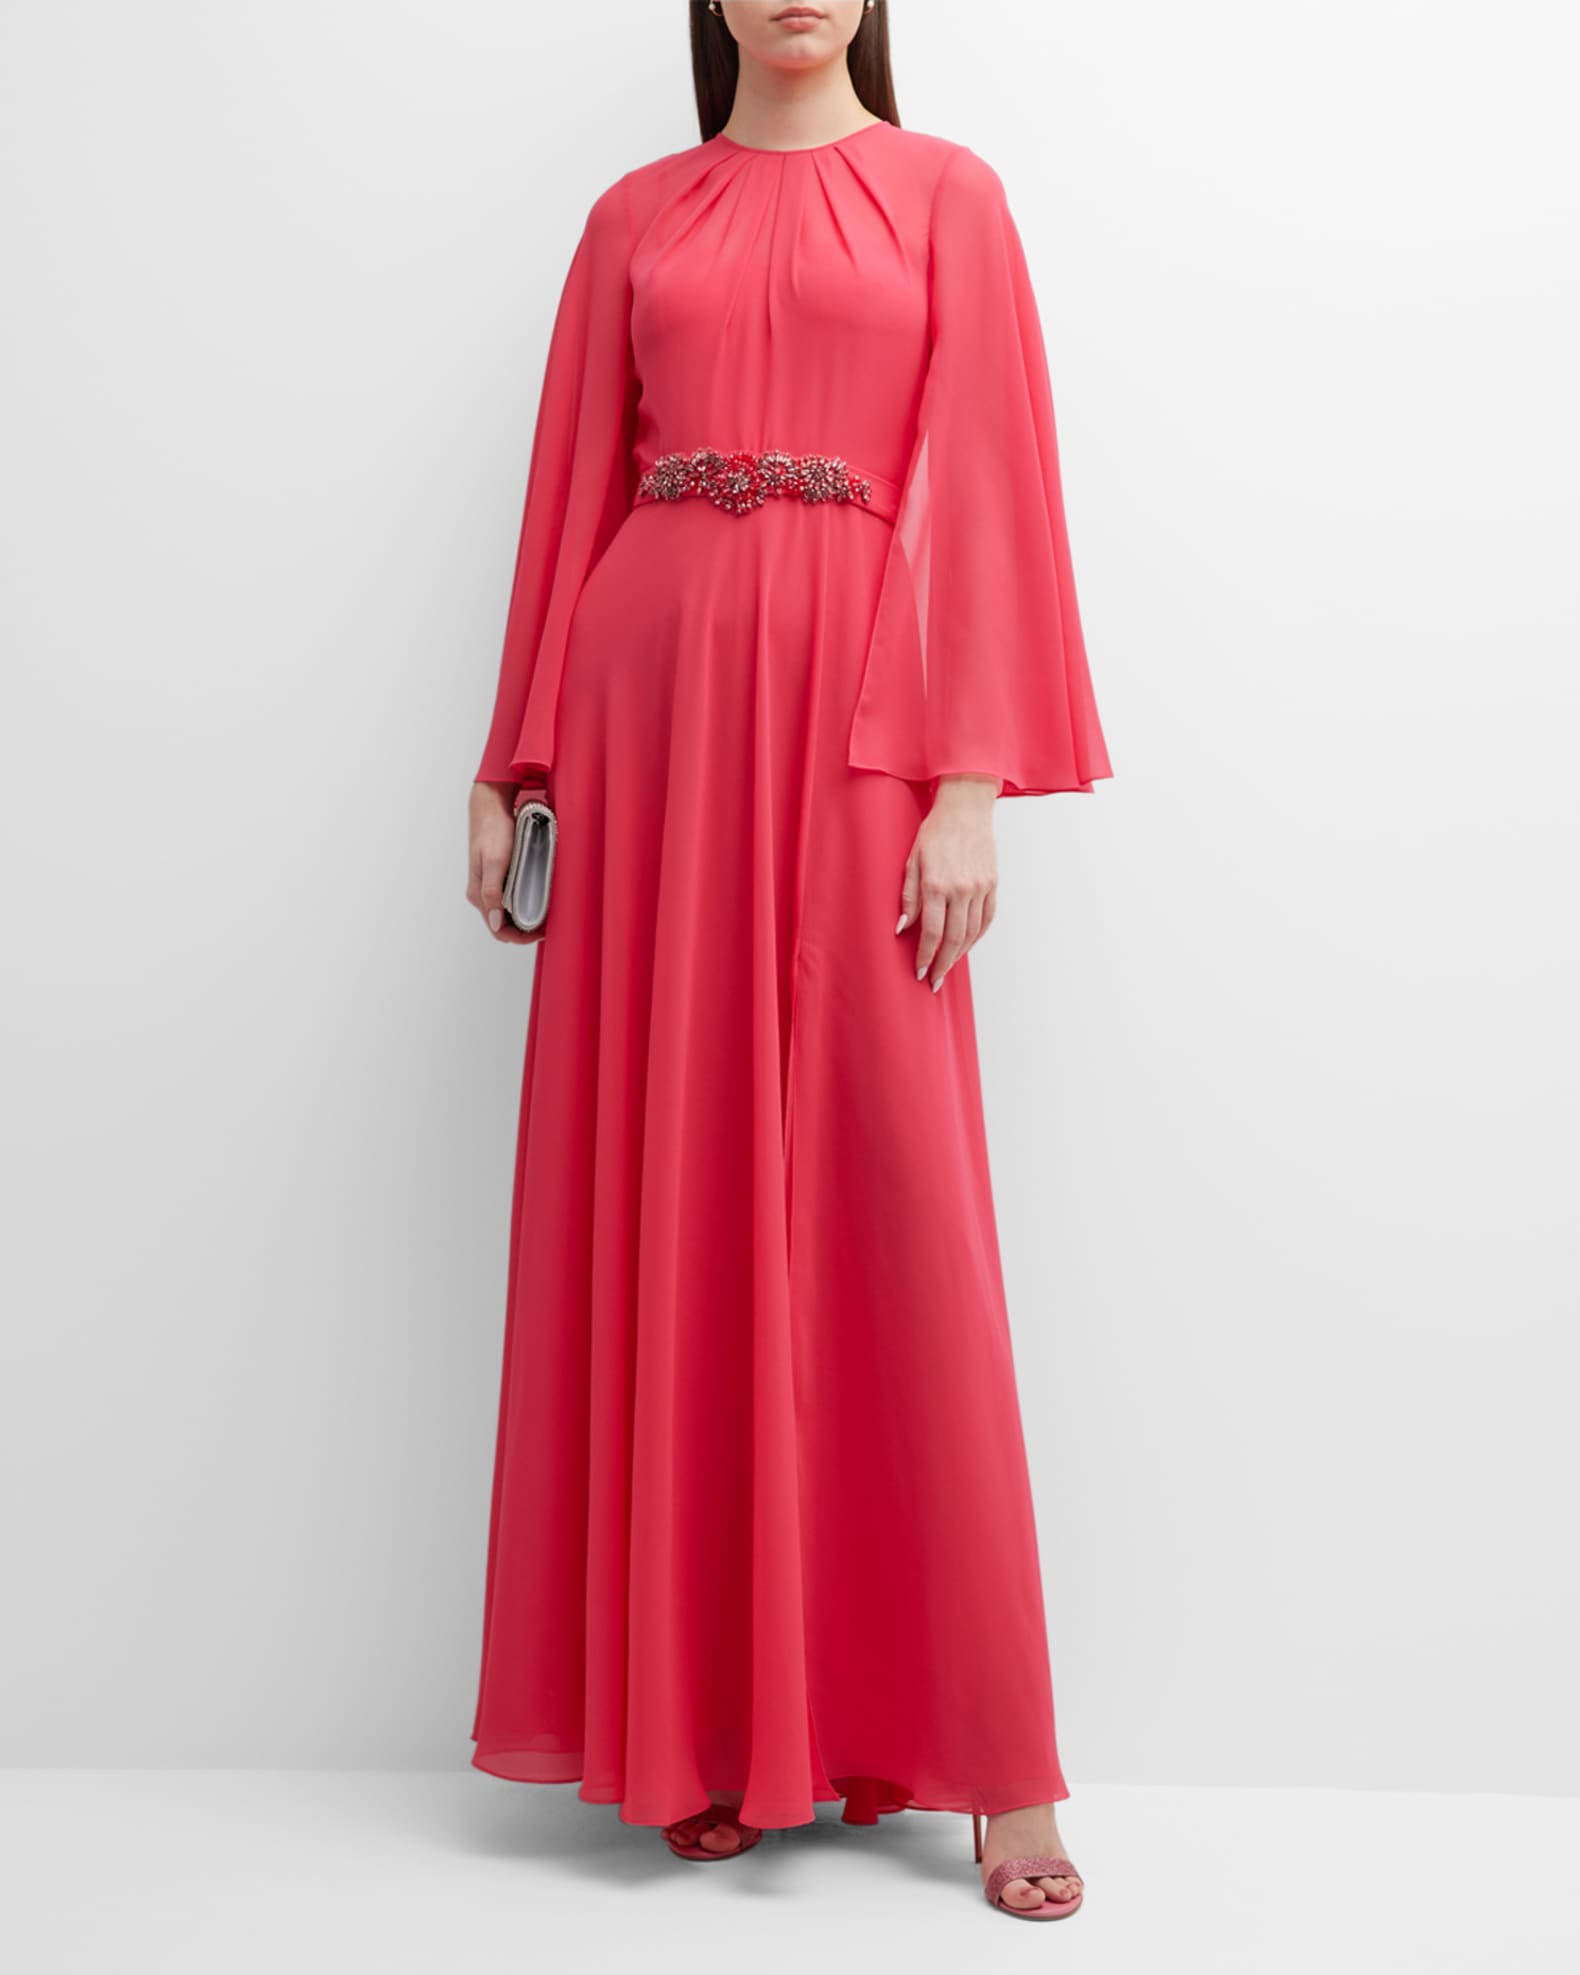 Rickie Freeman for Teri Jon Jewel-Embellished Cape-Sleeve Chiffon Gown ...